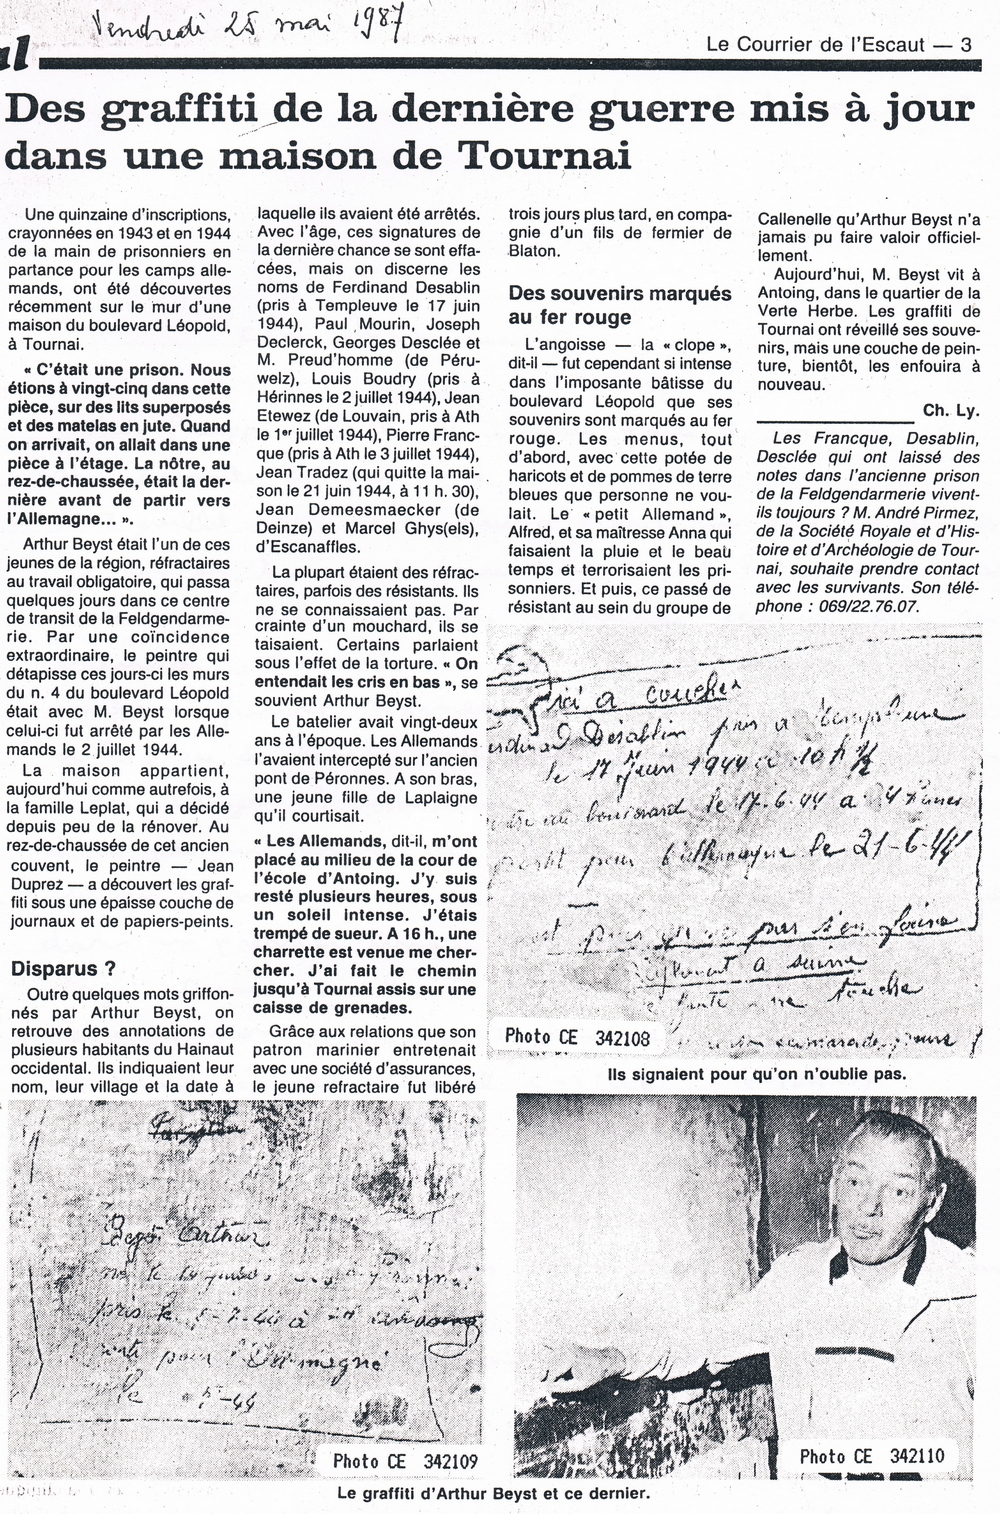 Prison nazie Tournai articje journal 1987